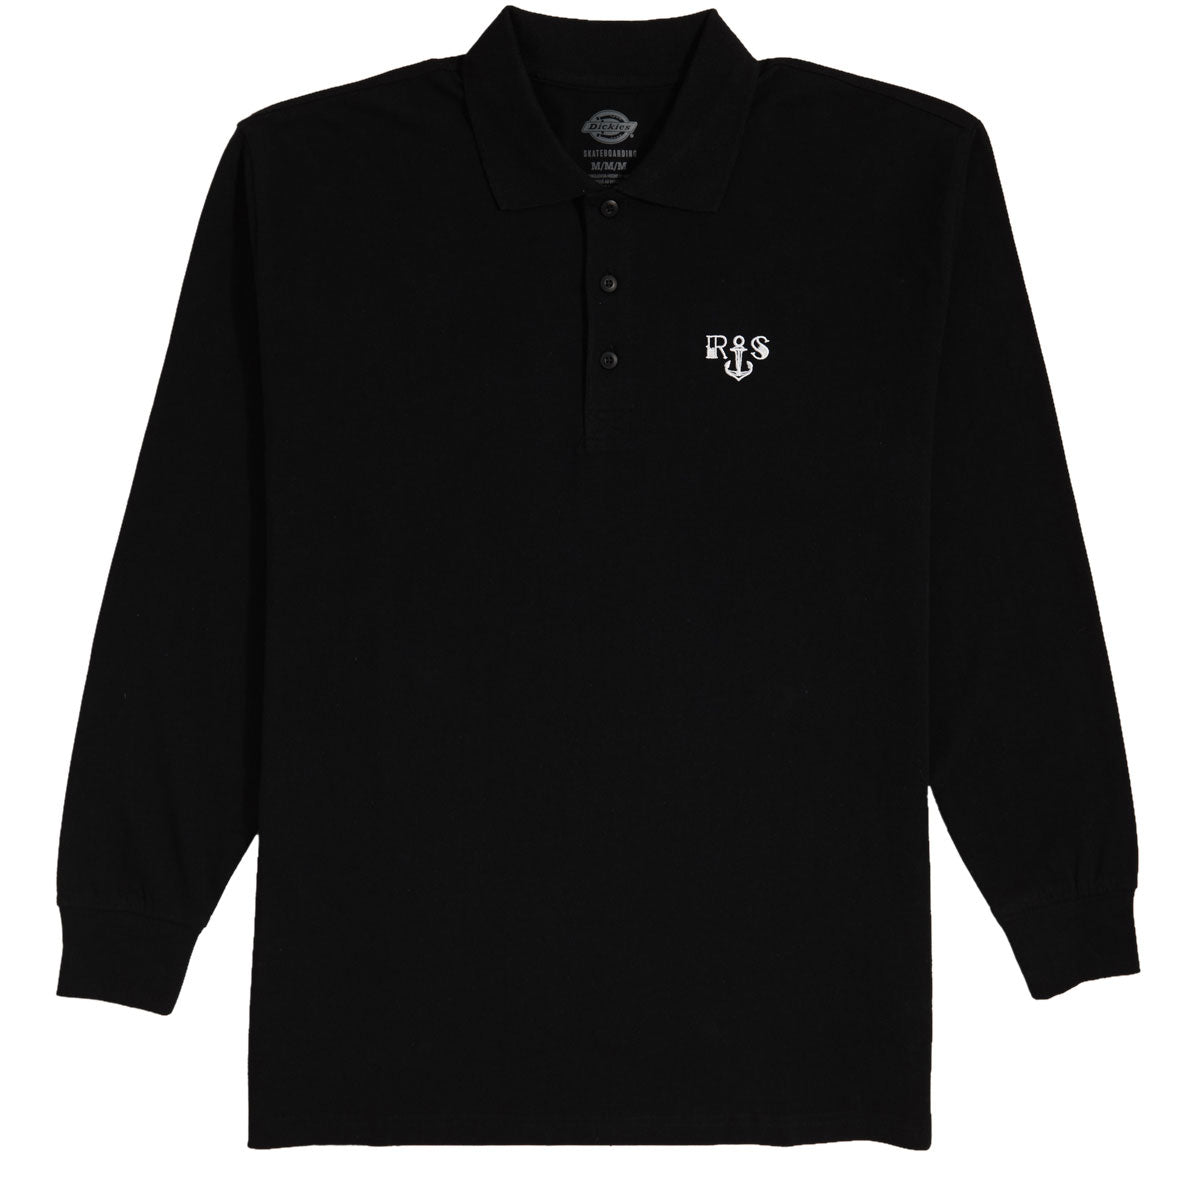 Dickies Ronnie Sandoval Polo Shirt - Knit Black image 1